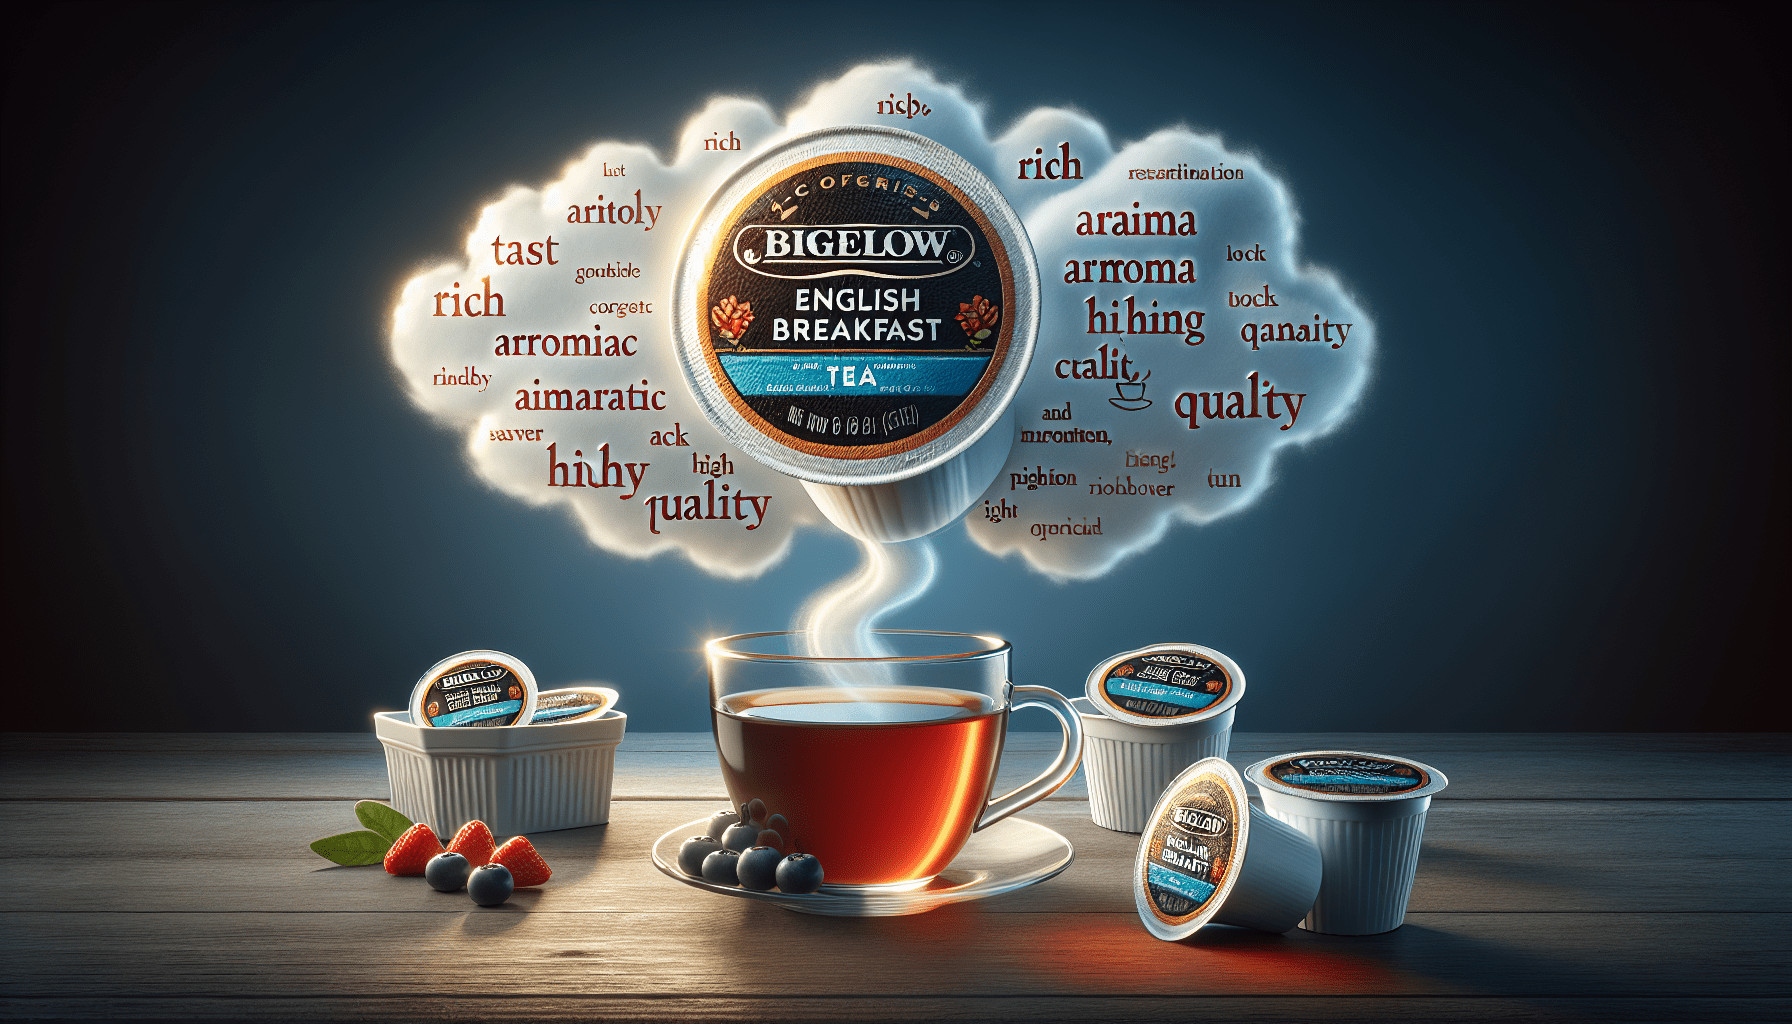 Bigelow English Breakfast Tea K-cup Review